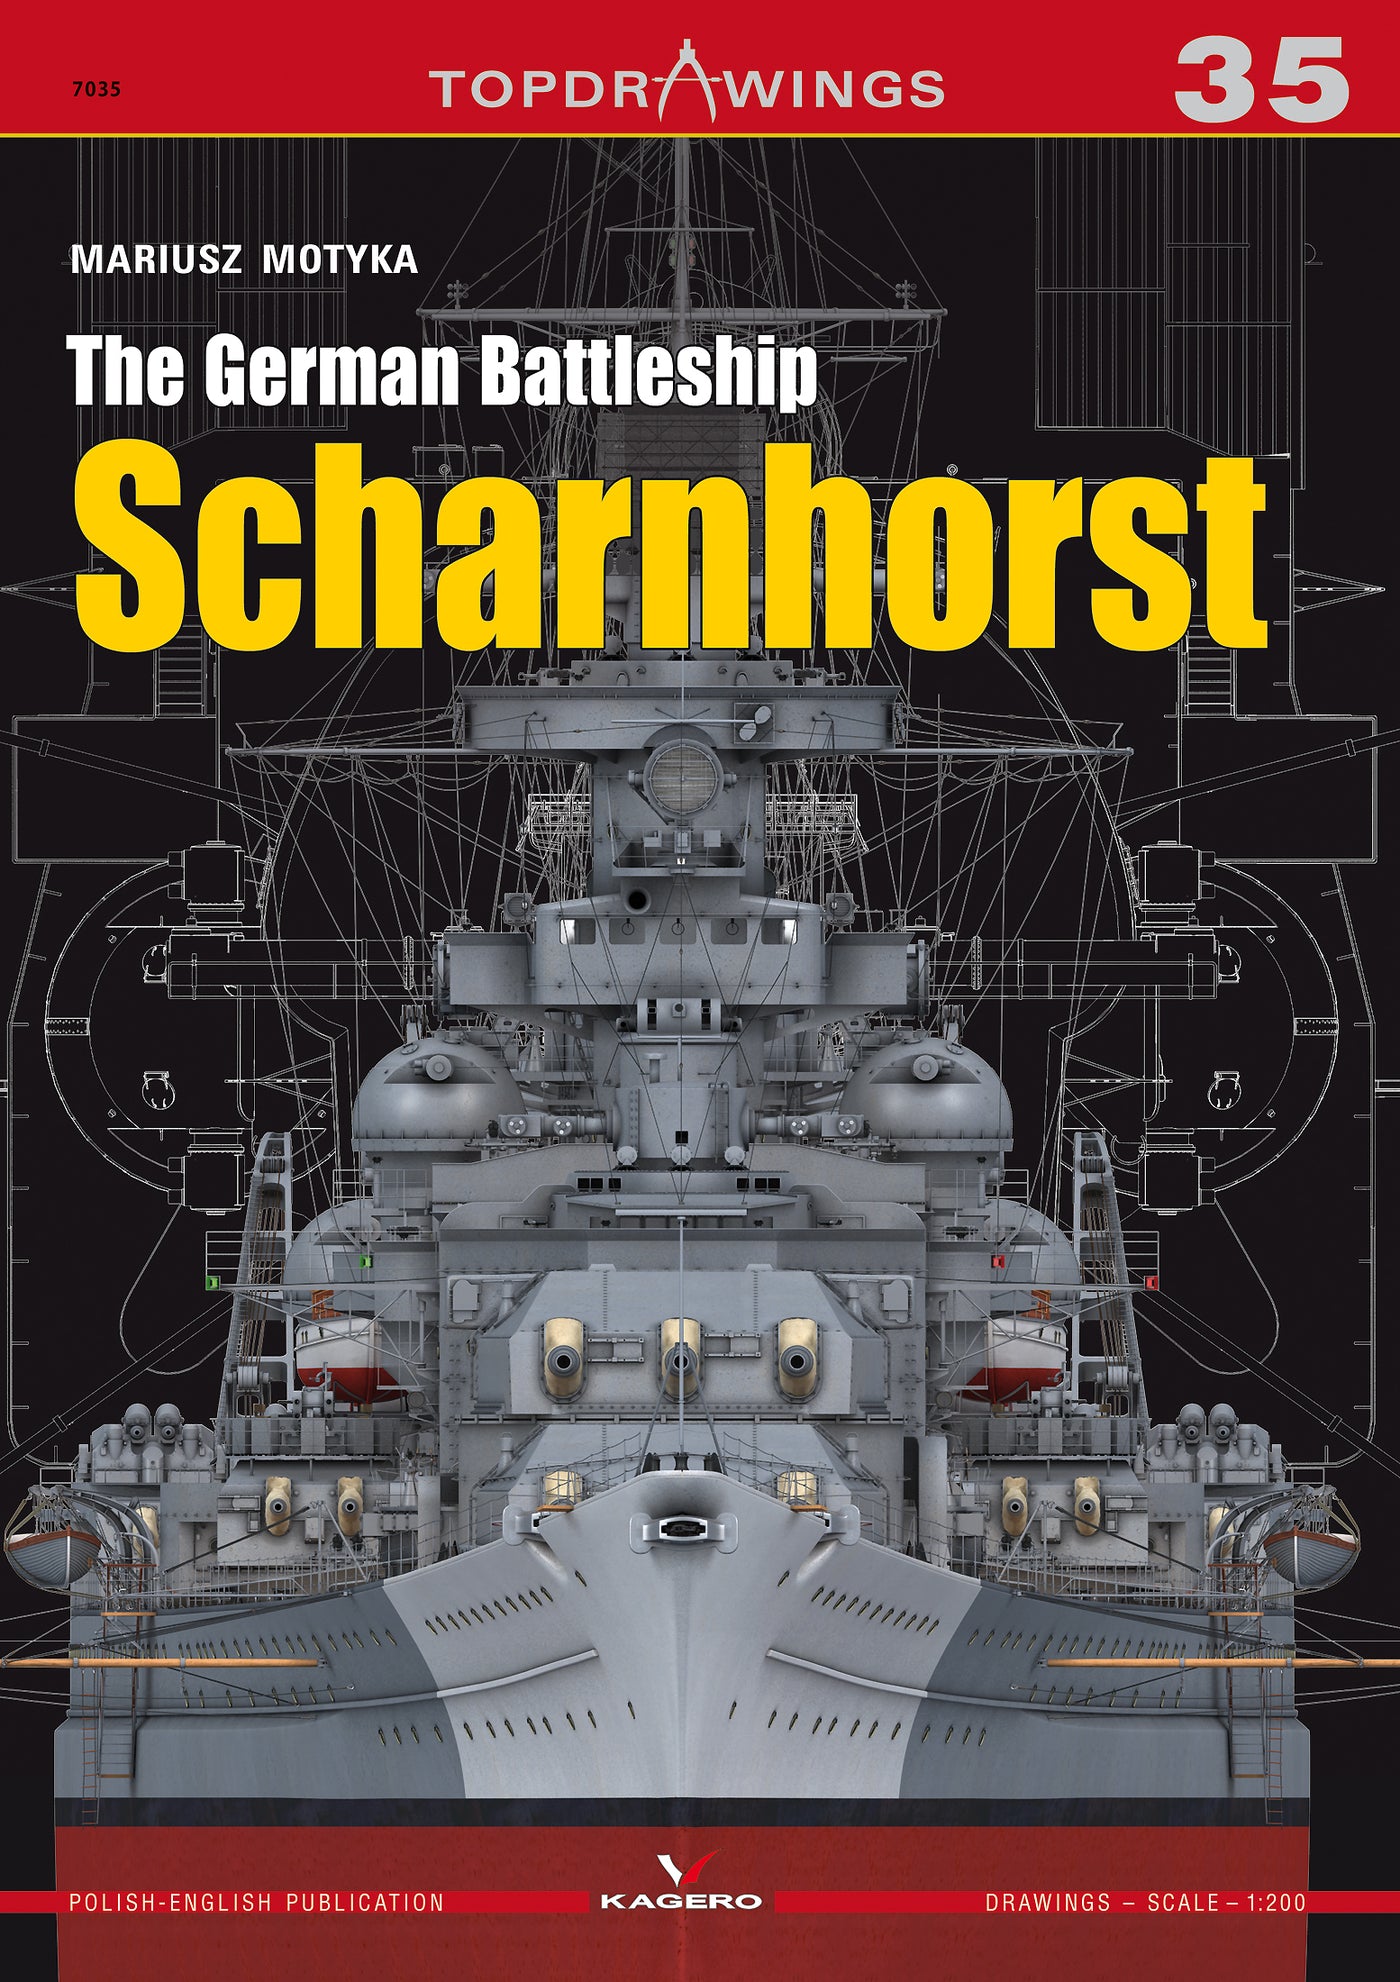 The German Battleship Sharnhorst